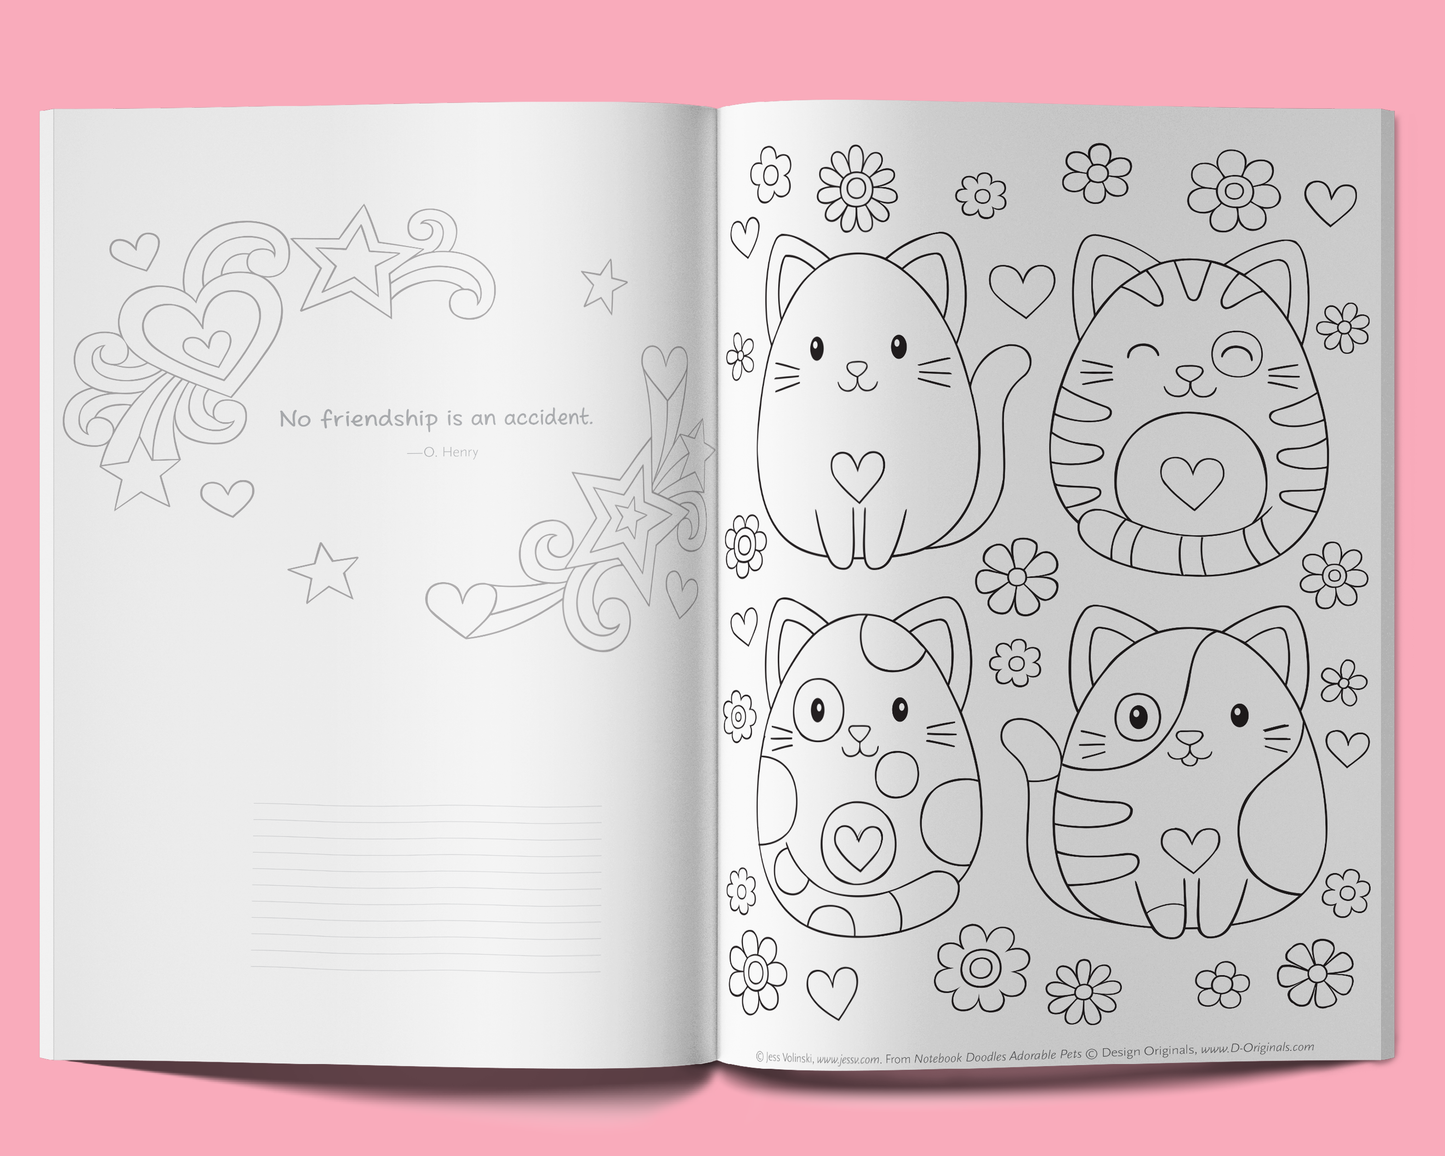 Notebook Doodles Adorable Pets Customized